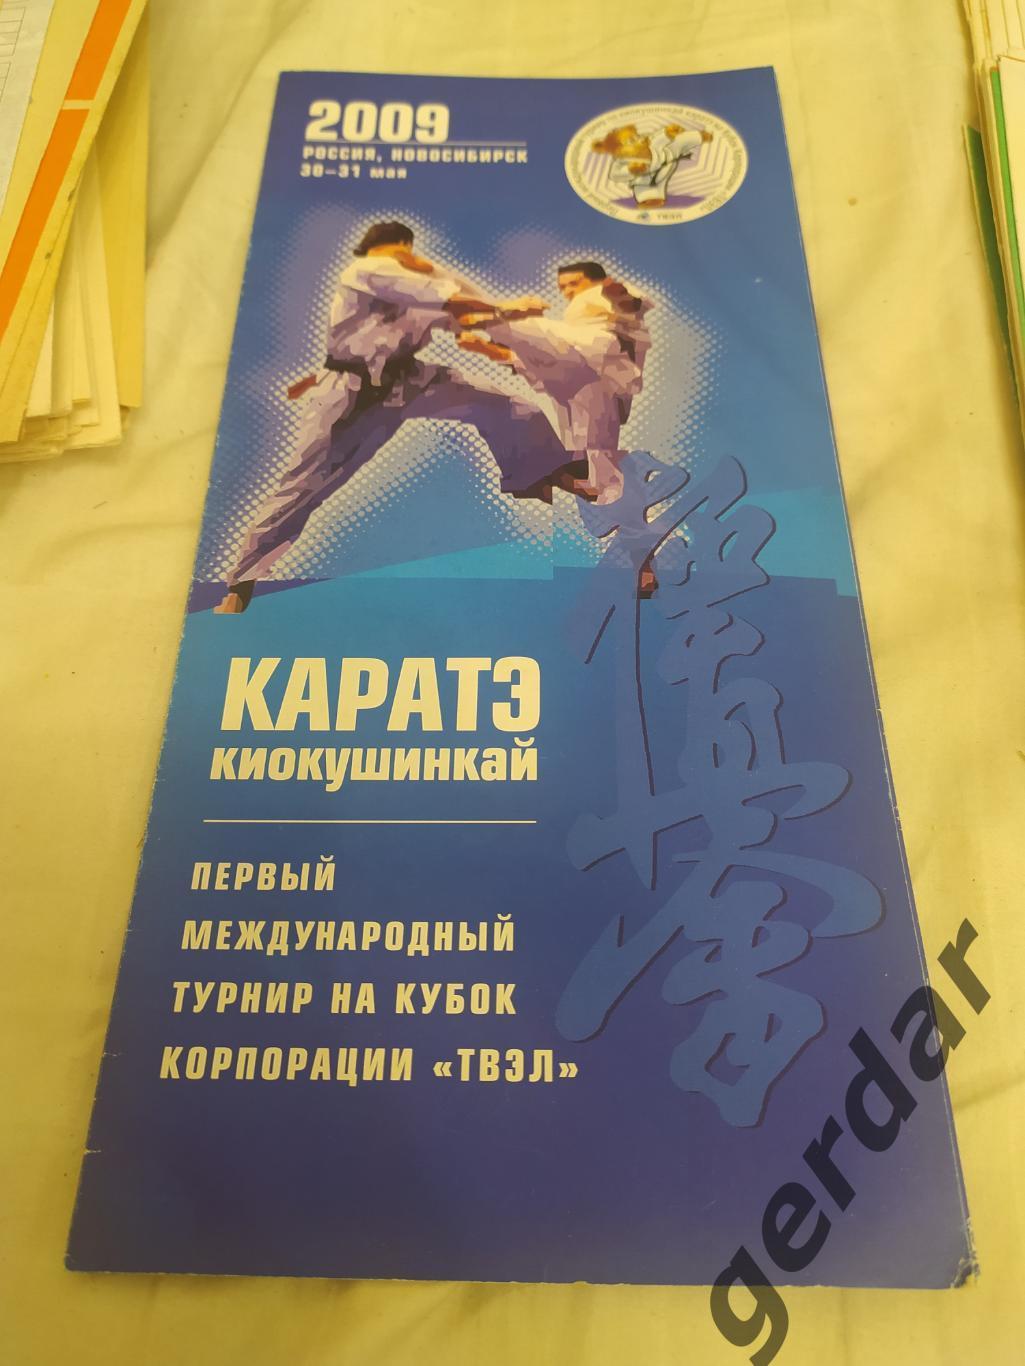 28 2009 Новосибирск турнир корпорация ТВЭЛ каратэкиокушинкай